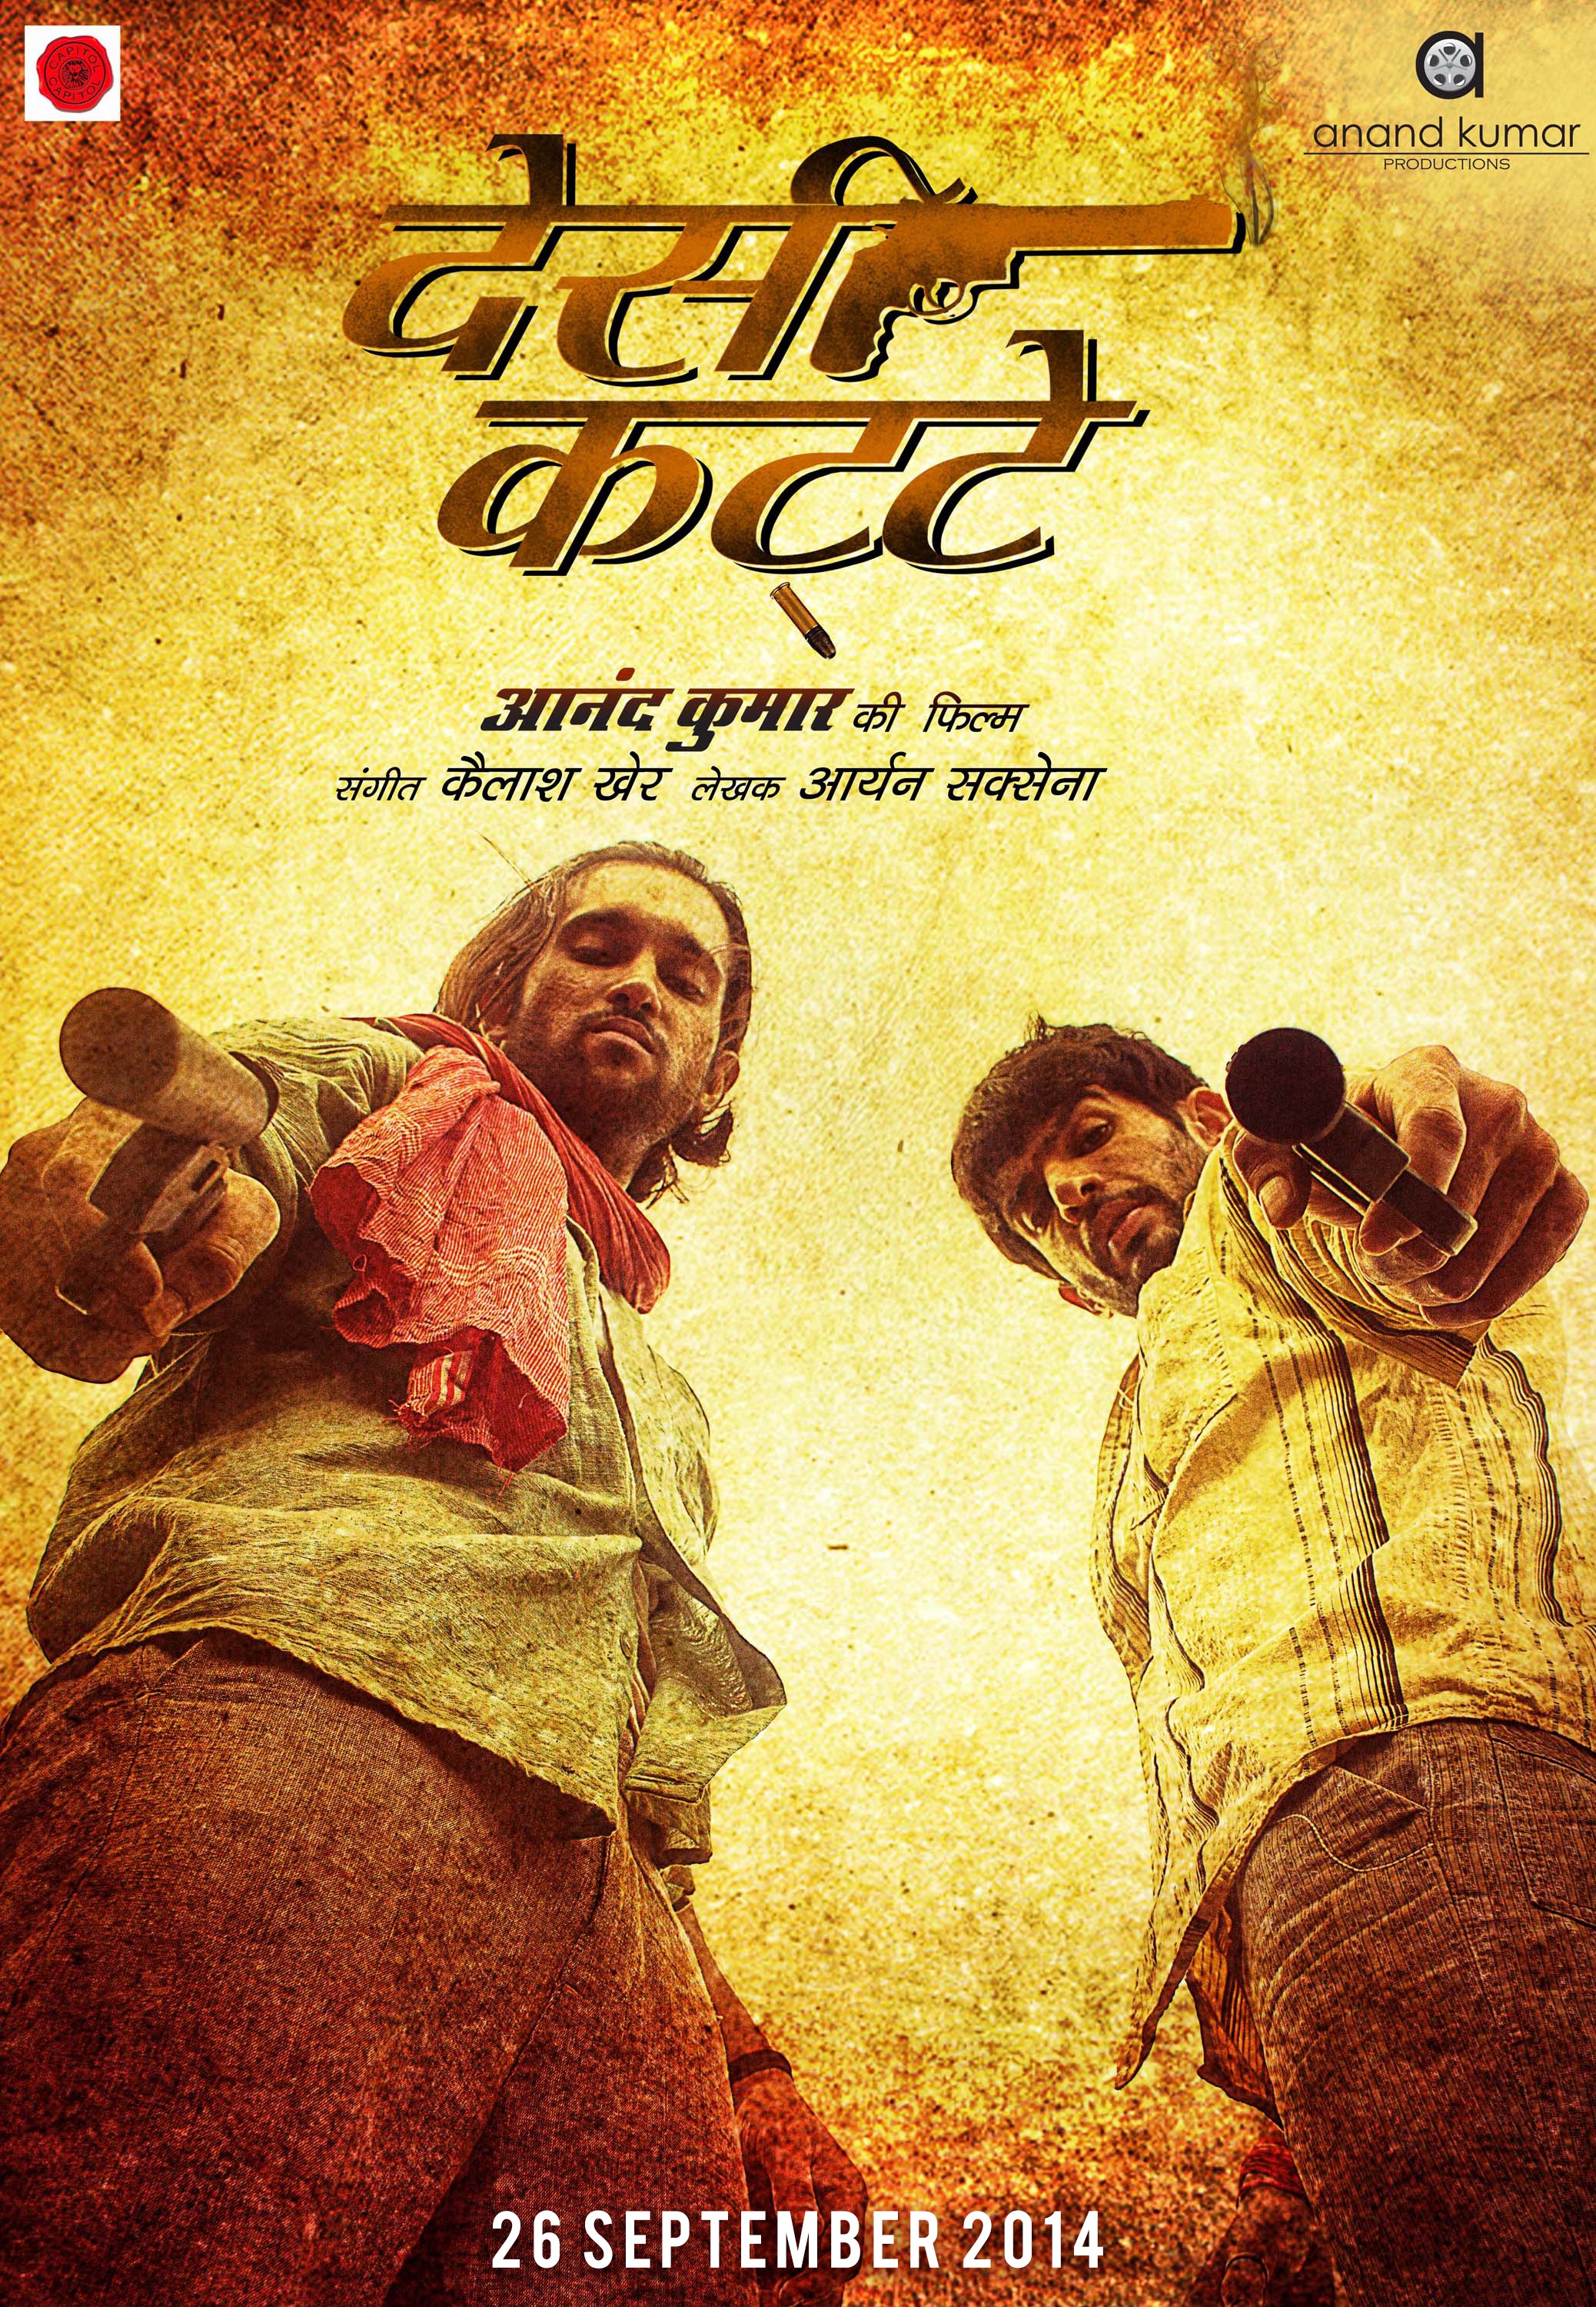 Mega Sized Movie Poster Image for Desi Kattey (#5 of 6)